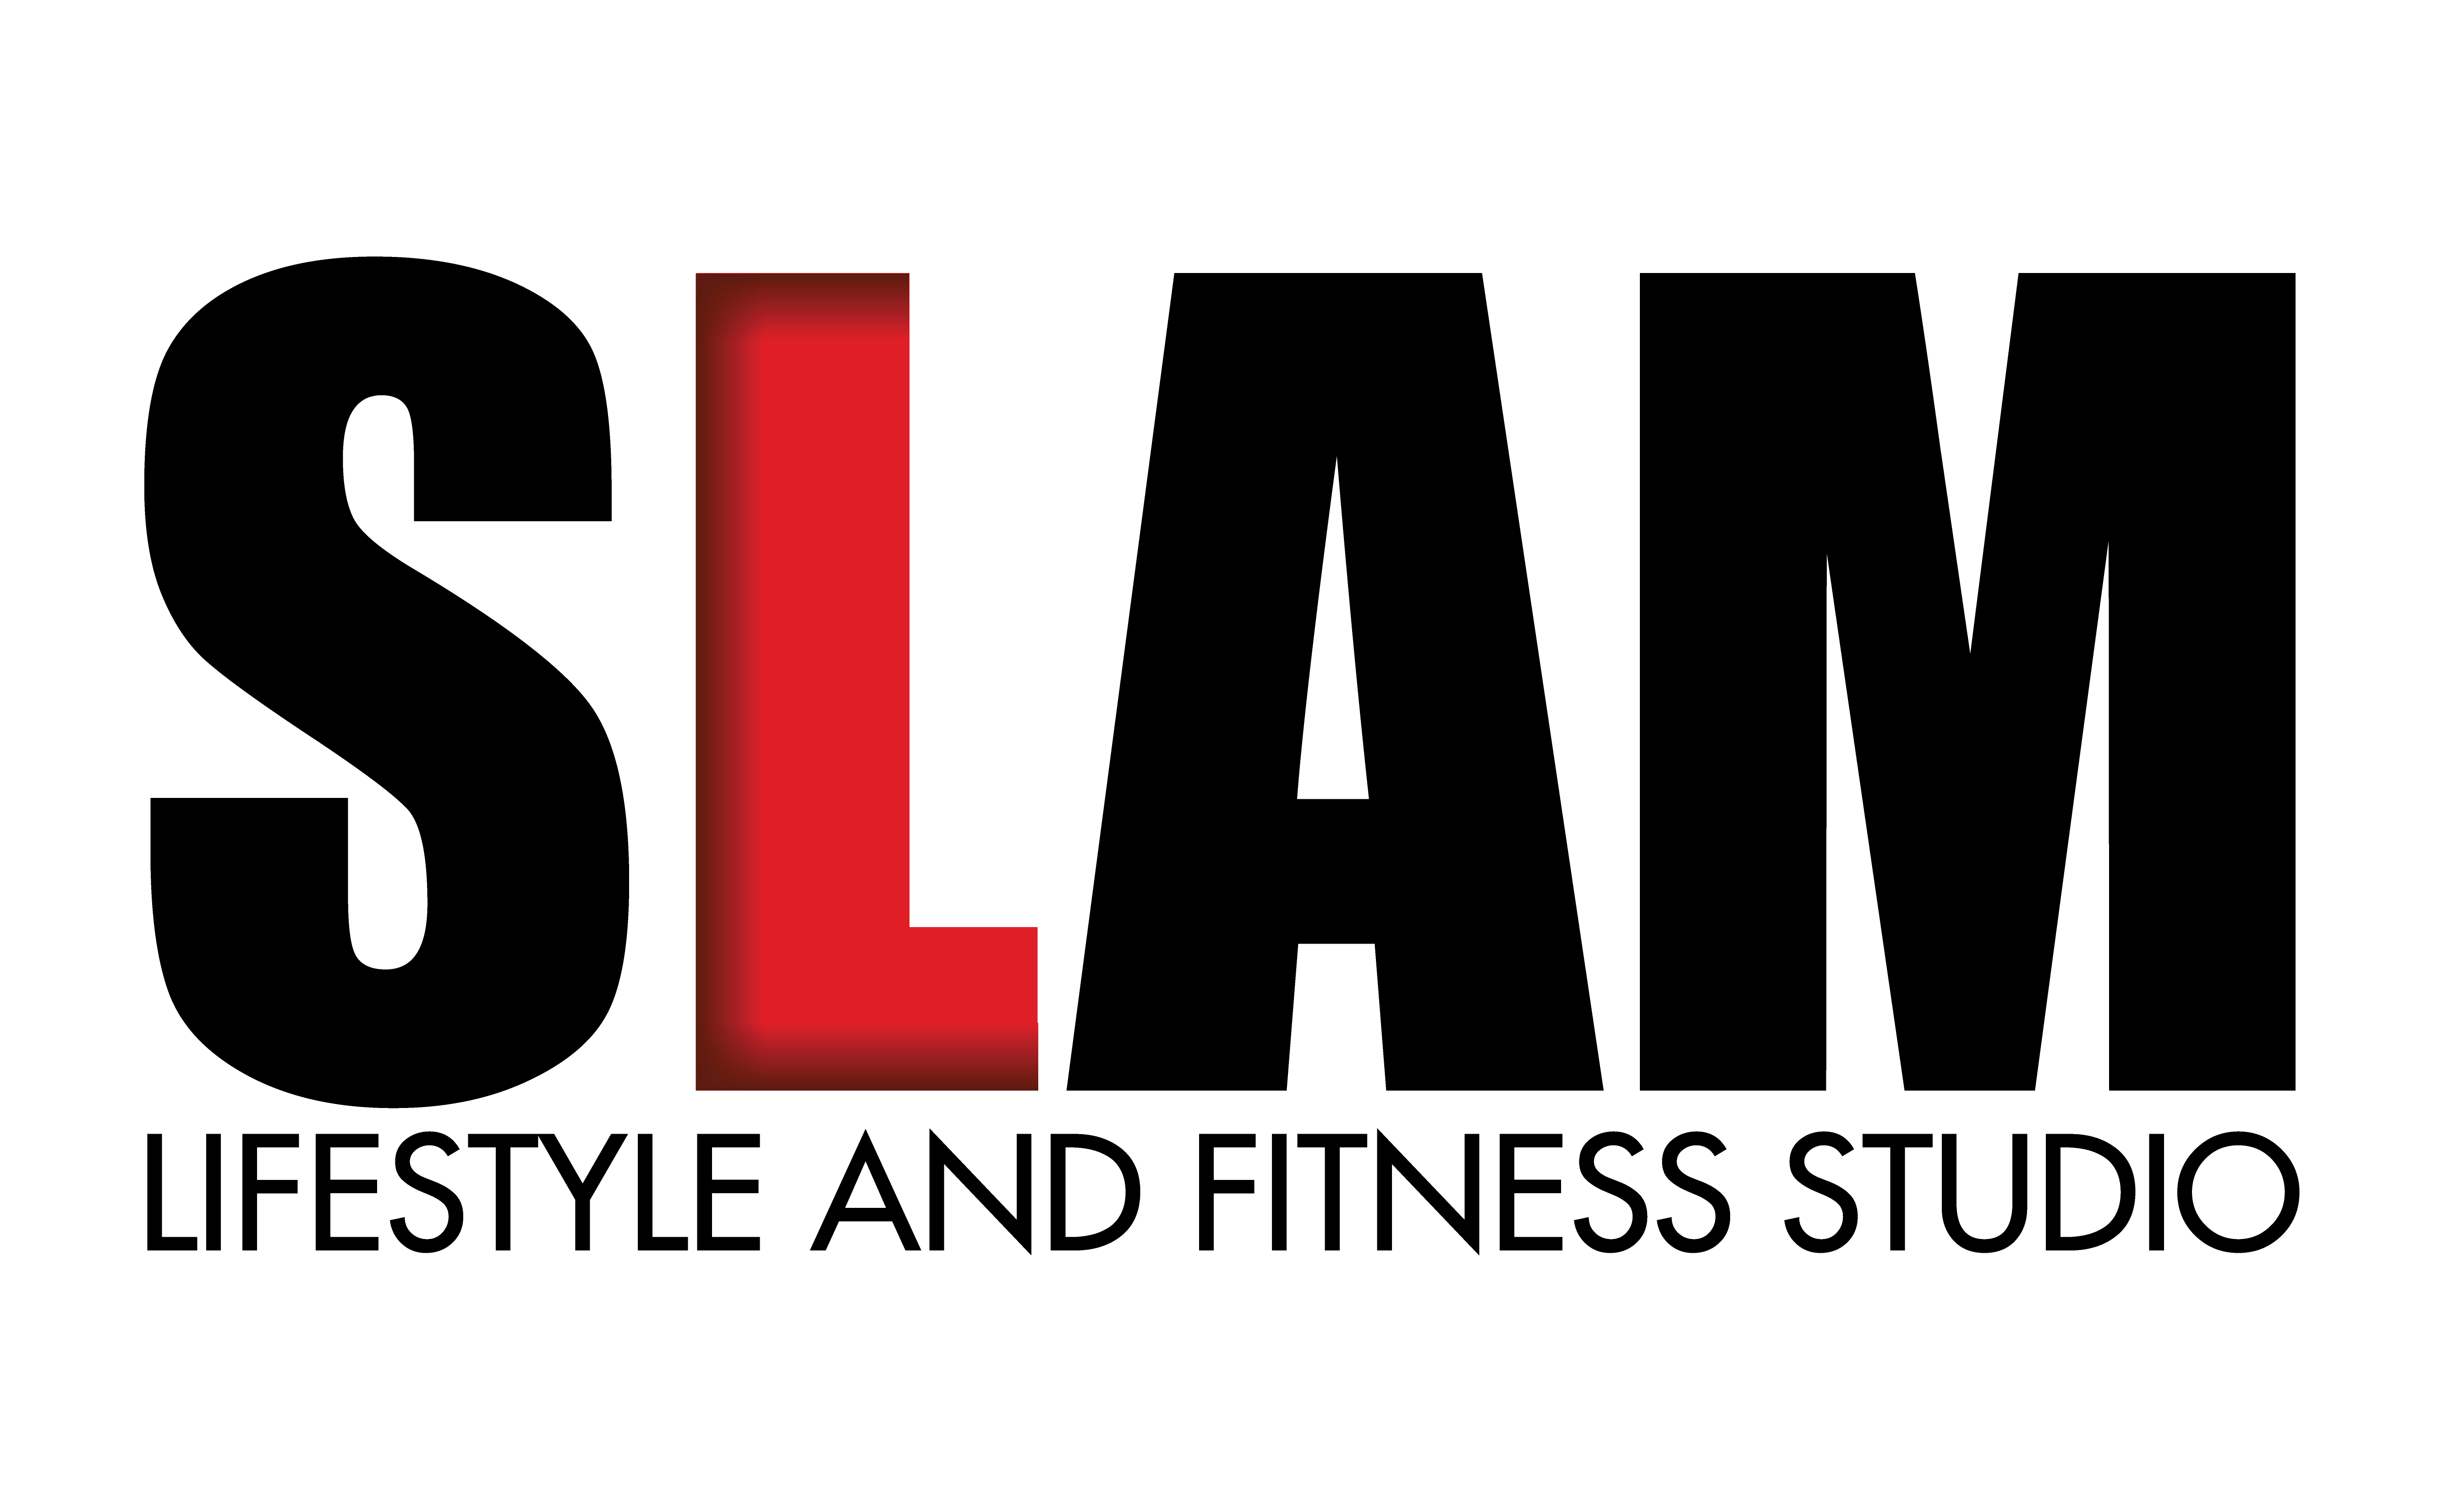 Slam Logo - Slam Lifestyle & Fitness Studio | Paulsons